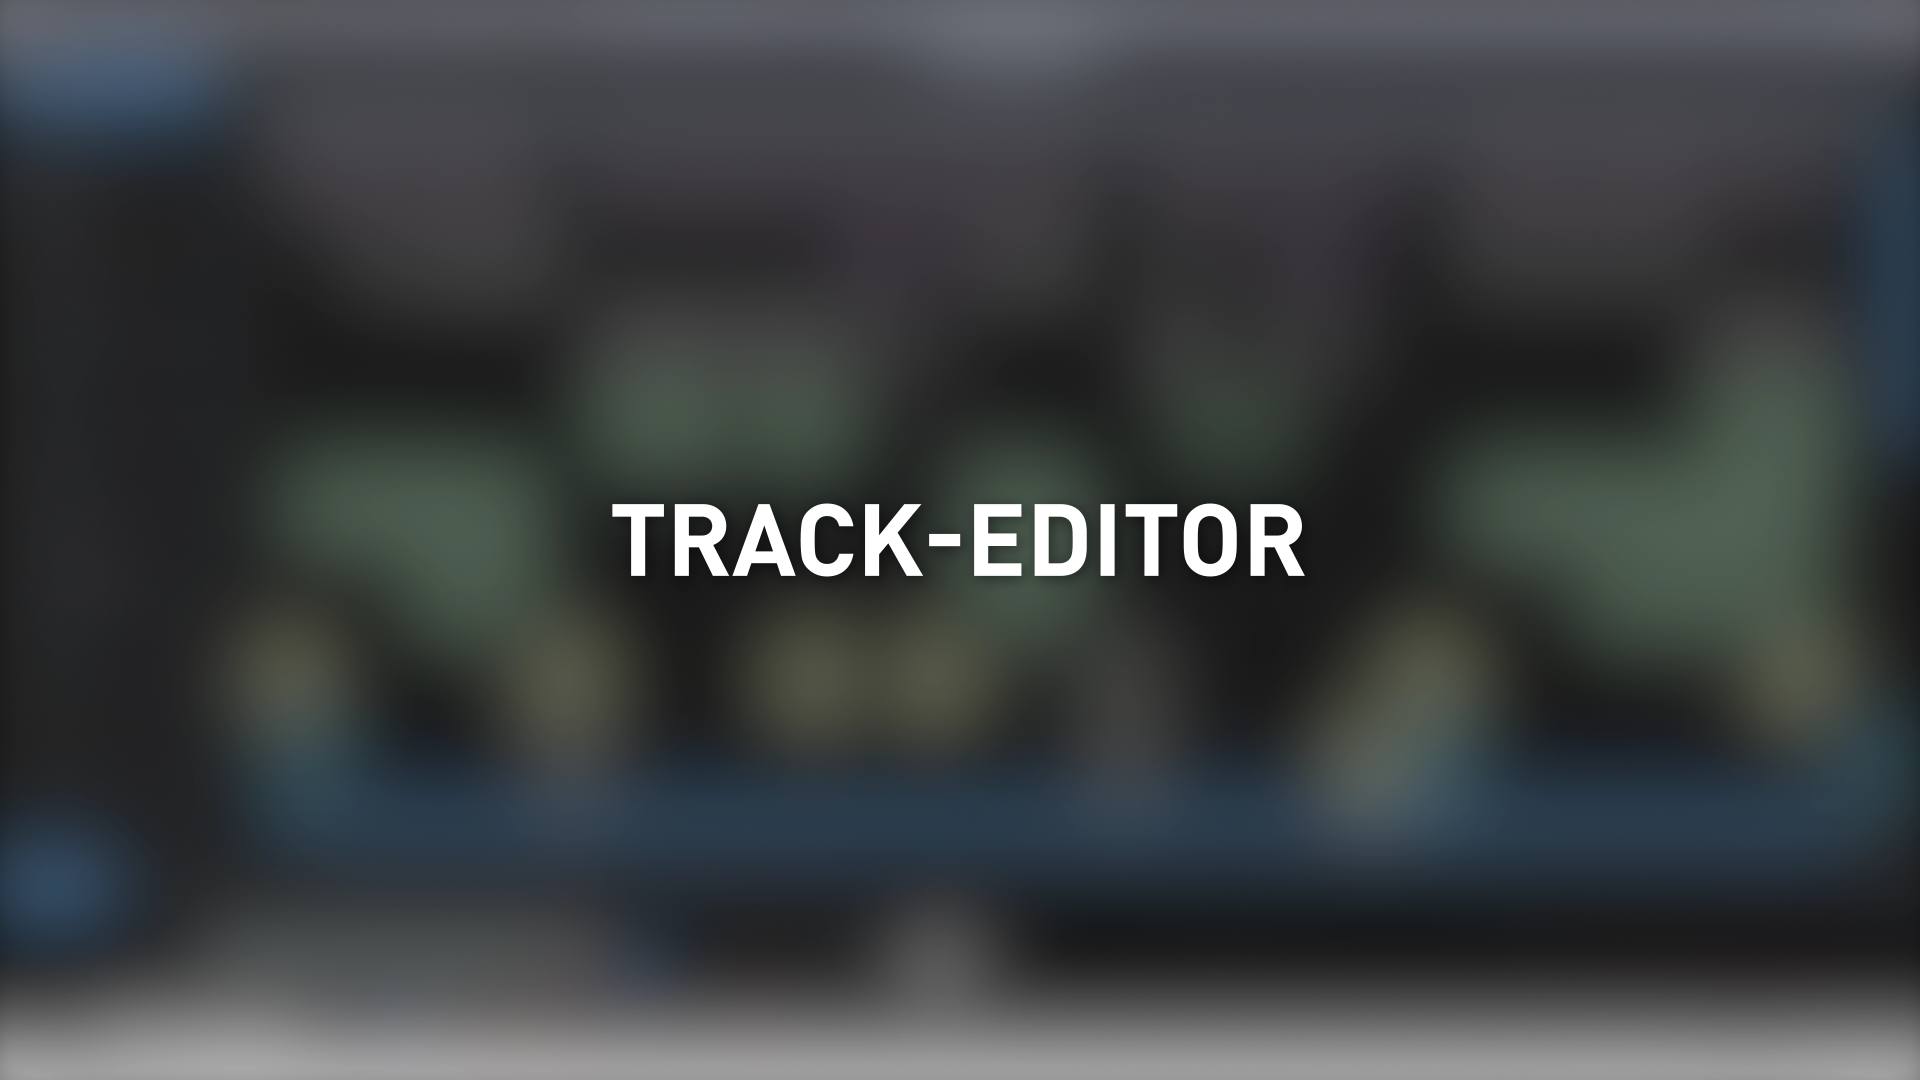 Track-Editor